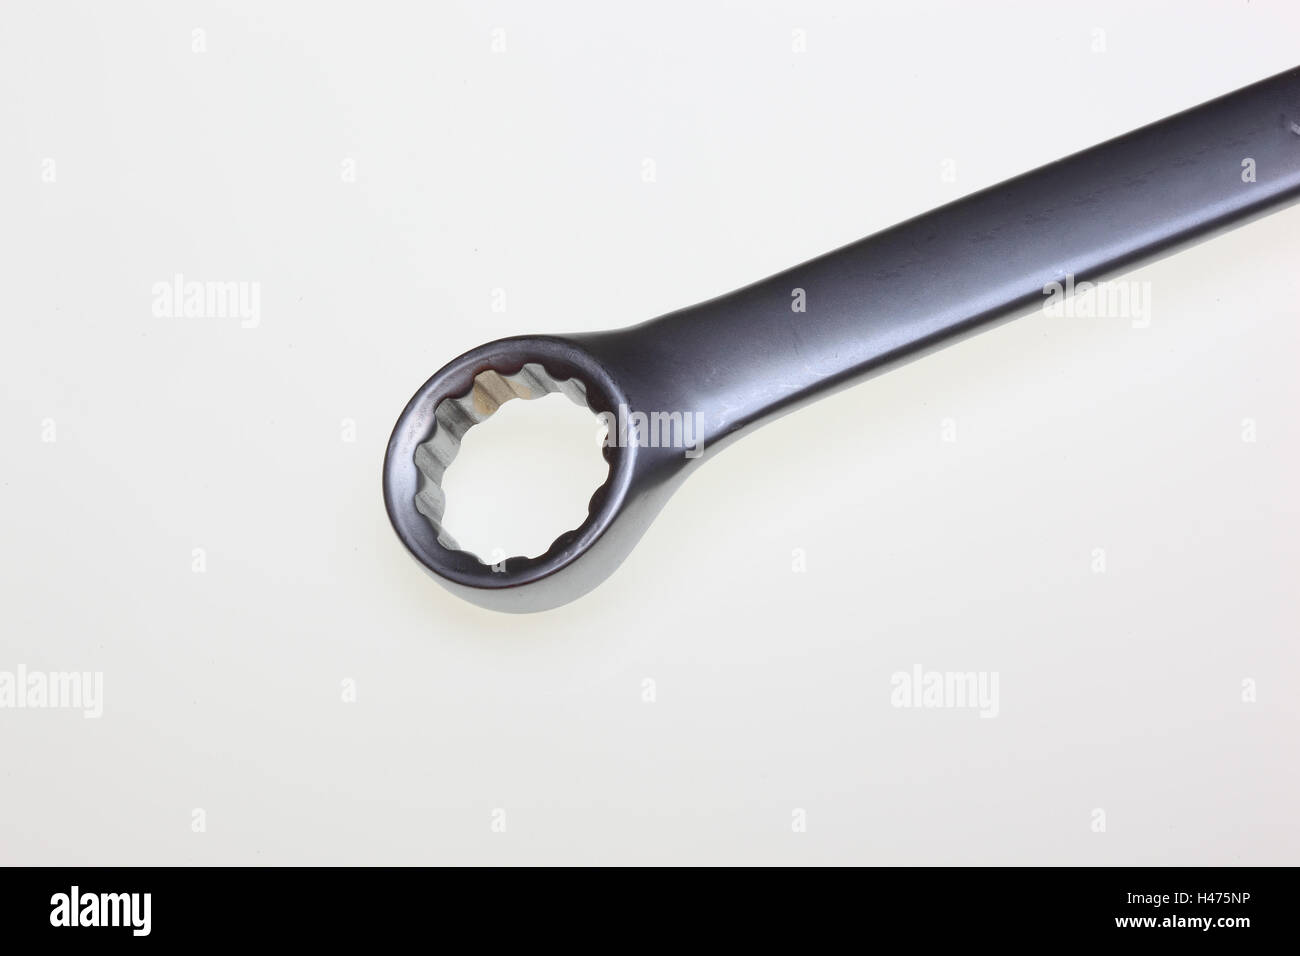 tool, chrome-vanadium metric spanner, ring spanner, ring wrench Stock Photo